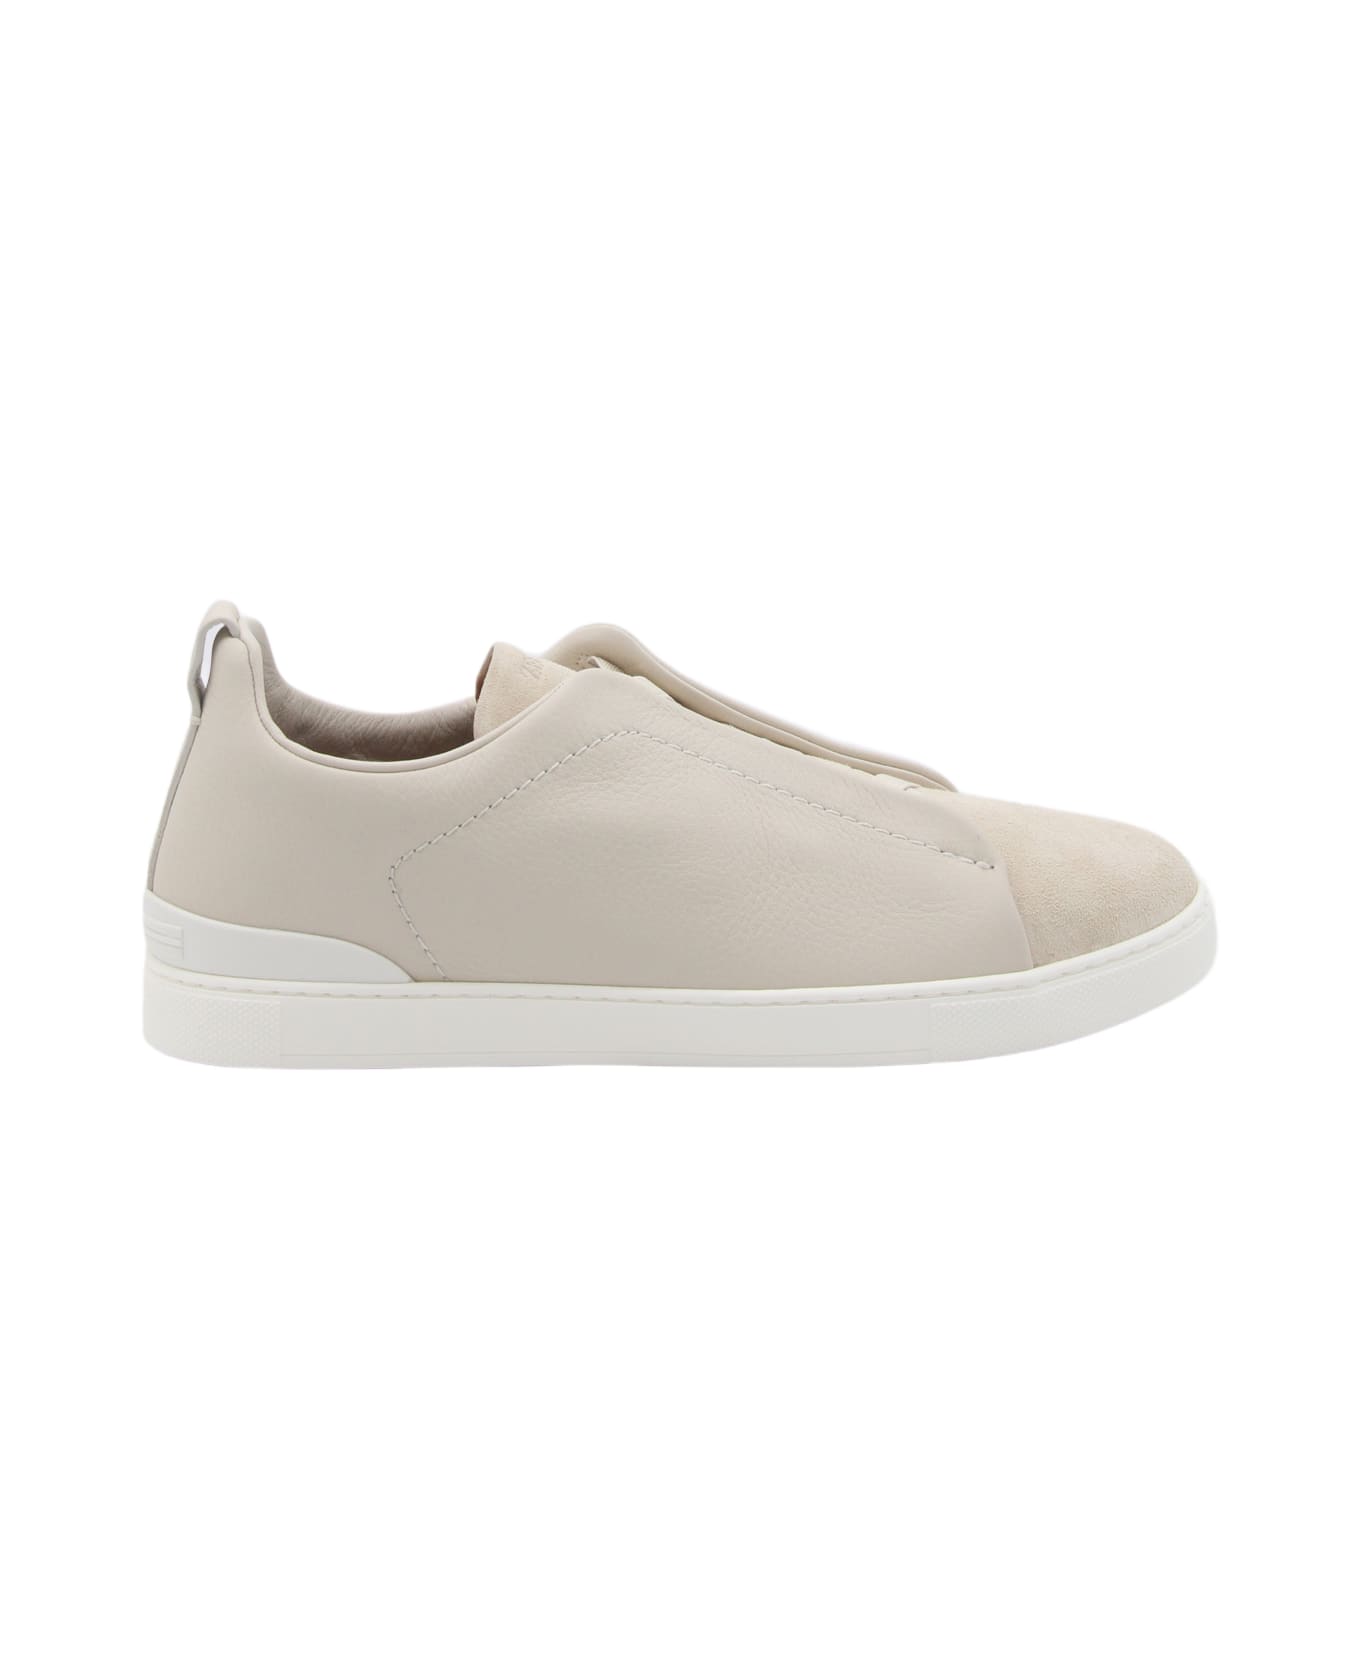 Zegna White Leather Slip On Sneakers - White